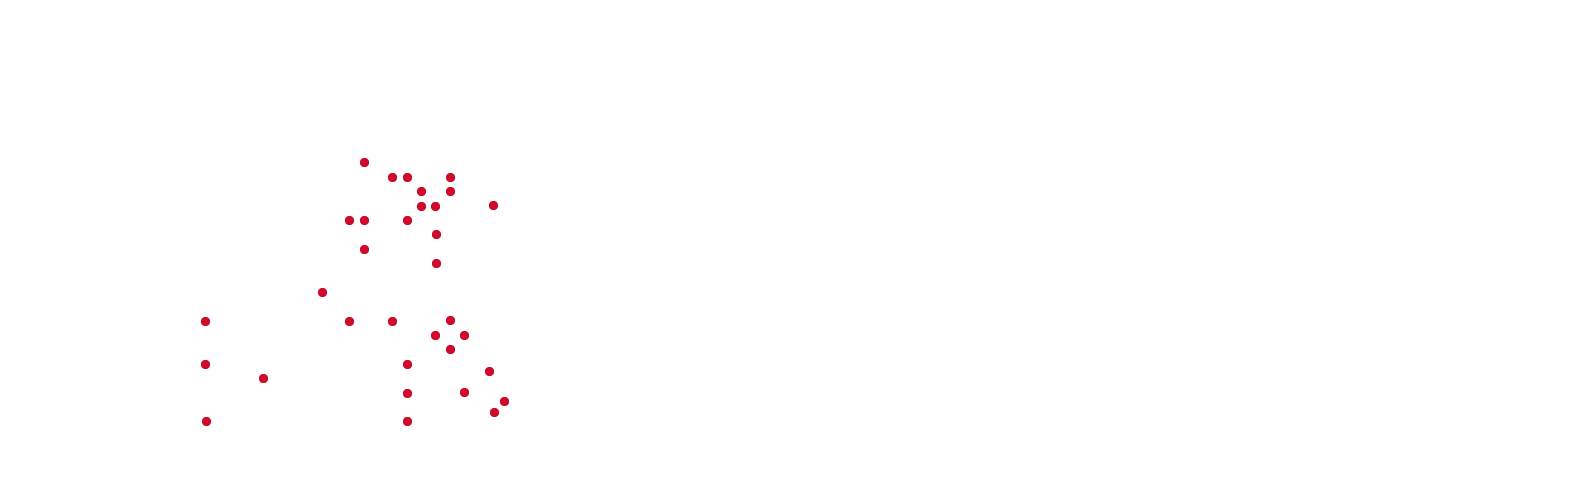 3 continentes, 35 países